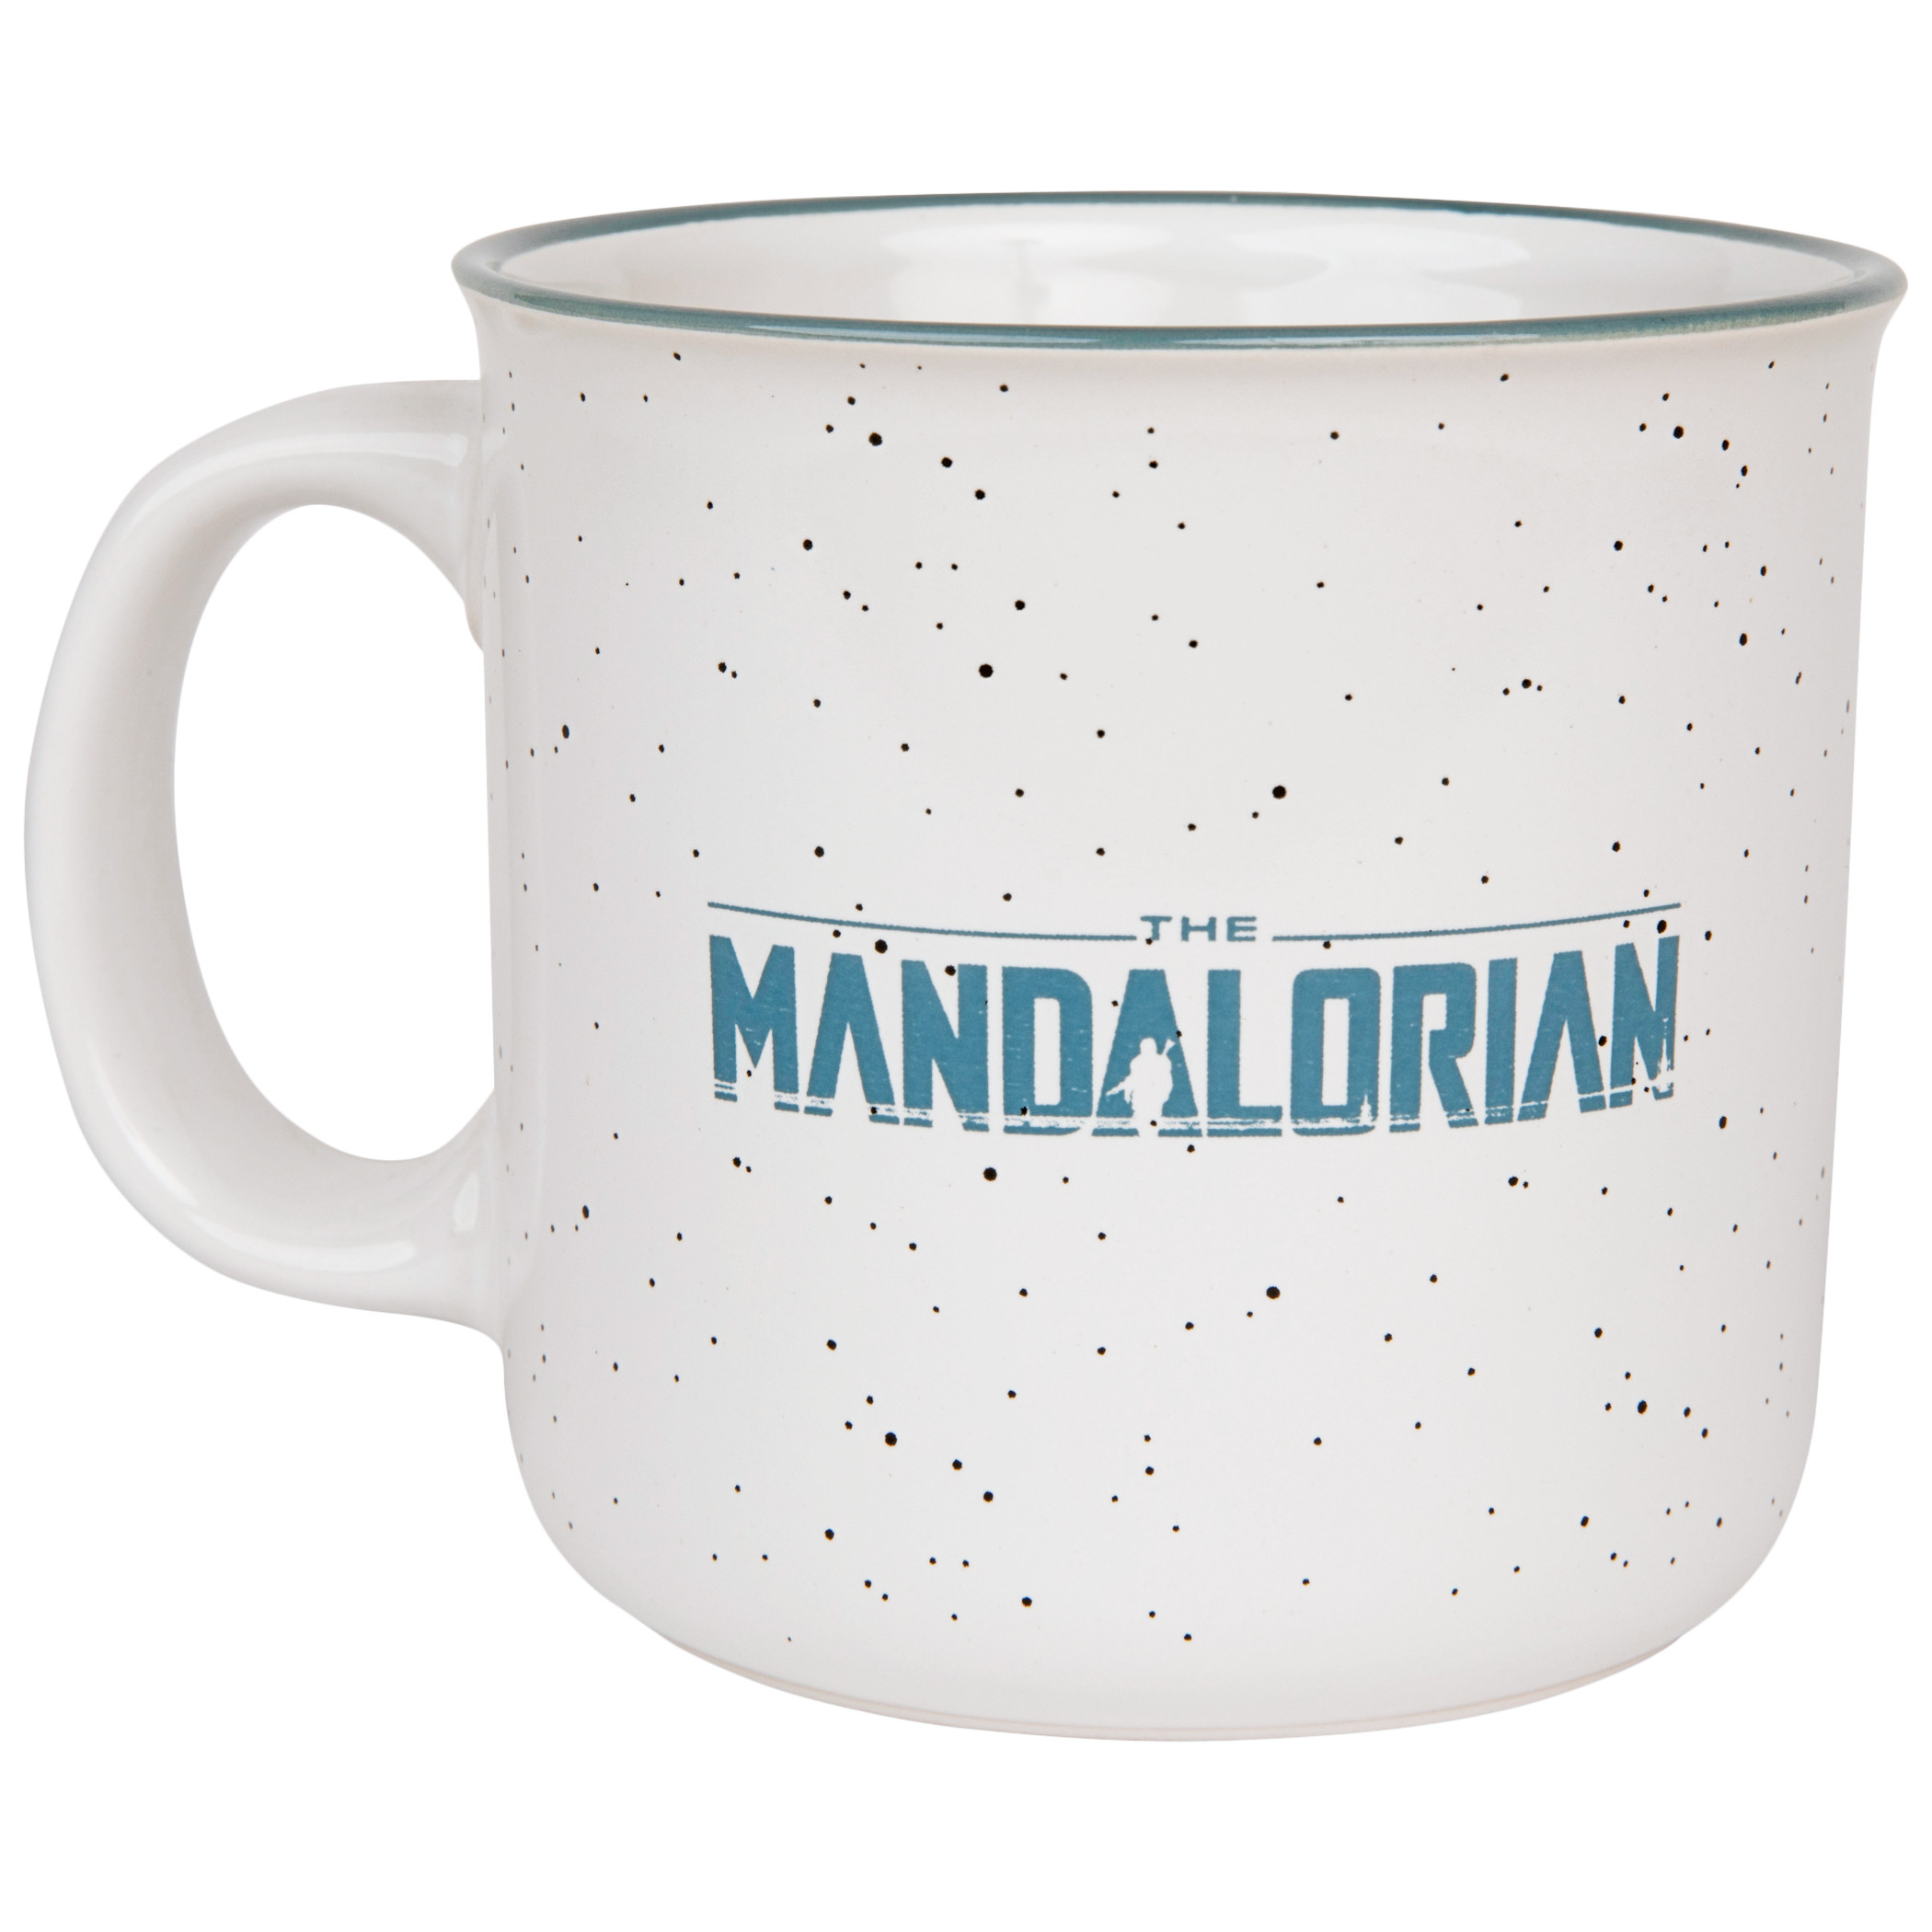 The Child Grogu Cup 22 oz. - The Mandalorian